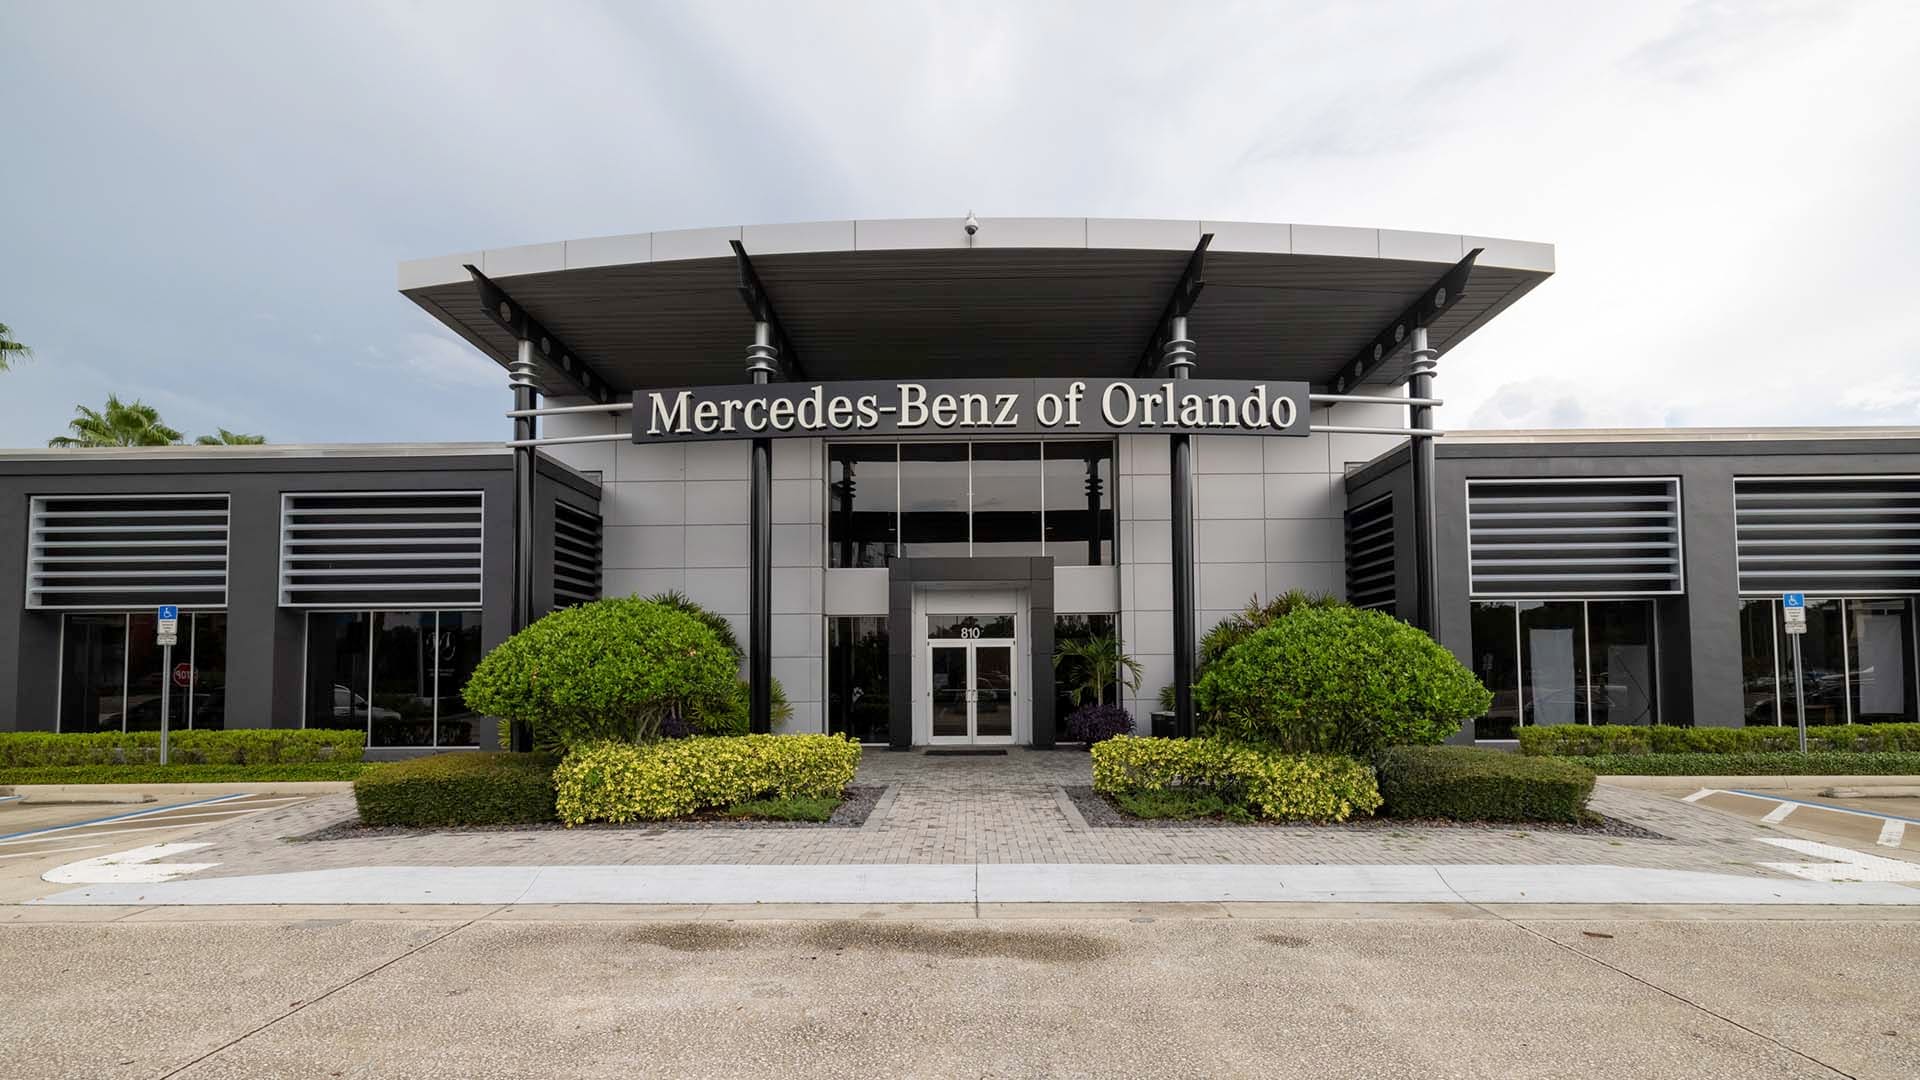 Exterior view of Mercedes-Benz of Orlando